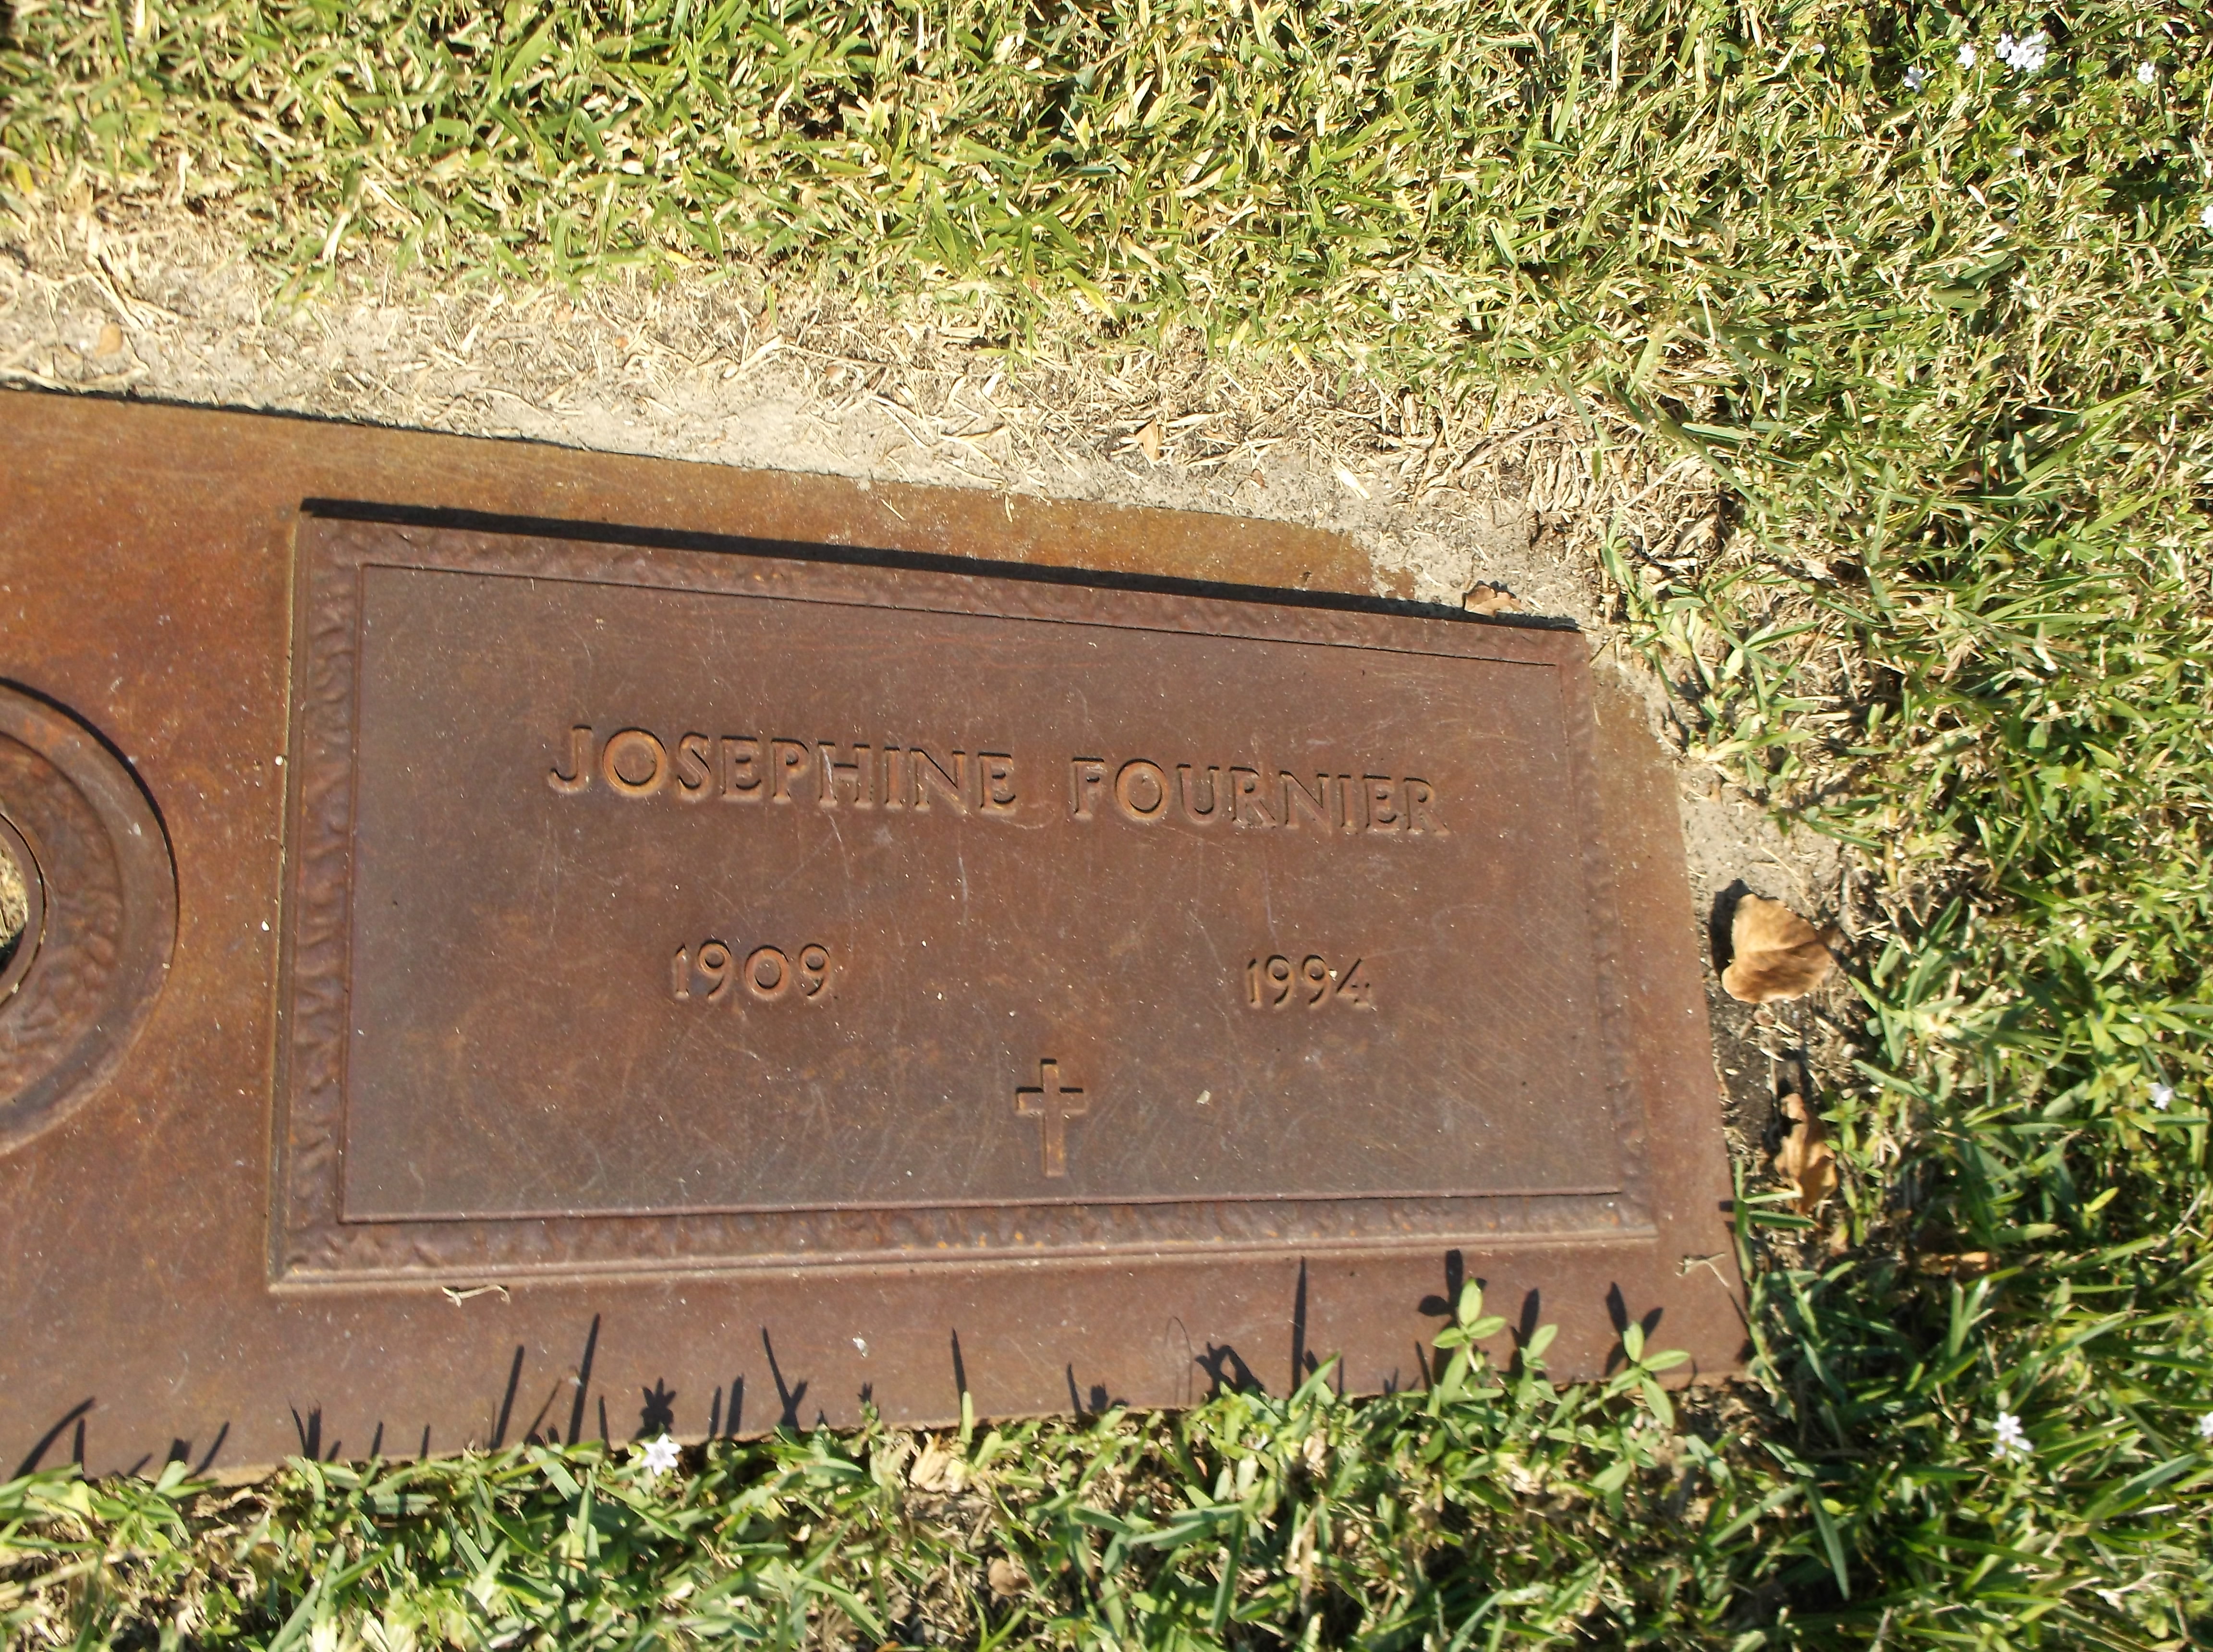 Josephine Fournier